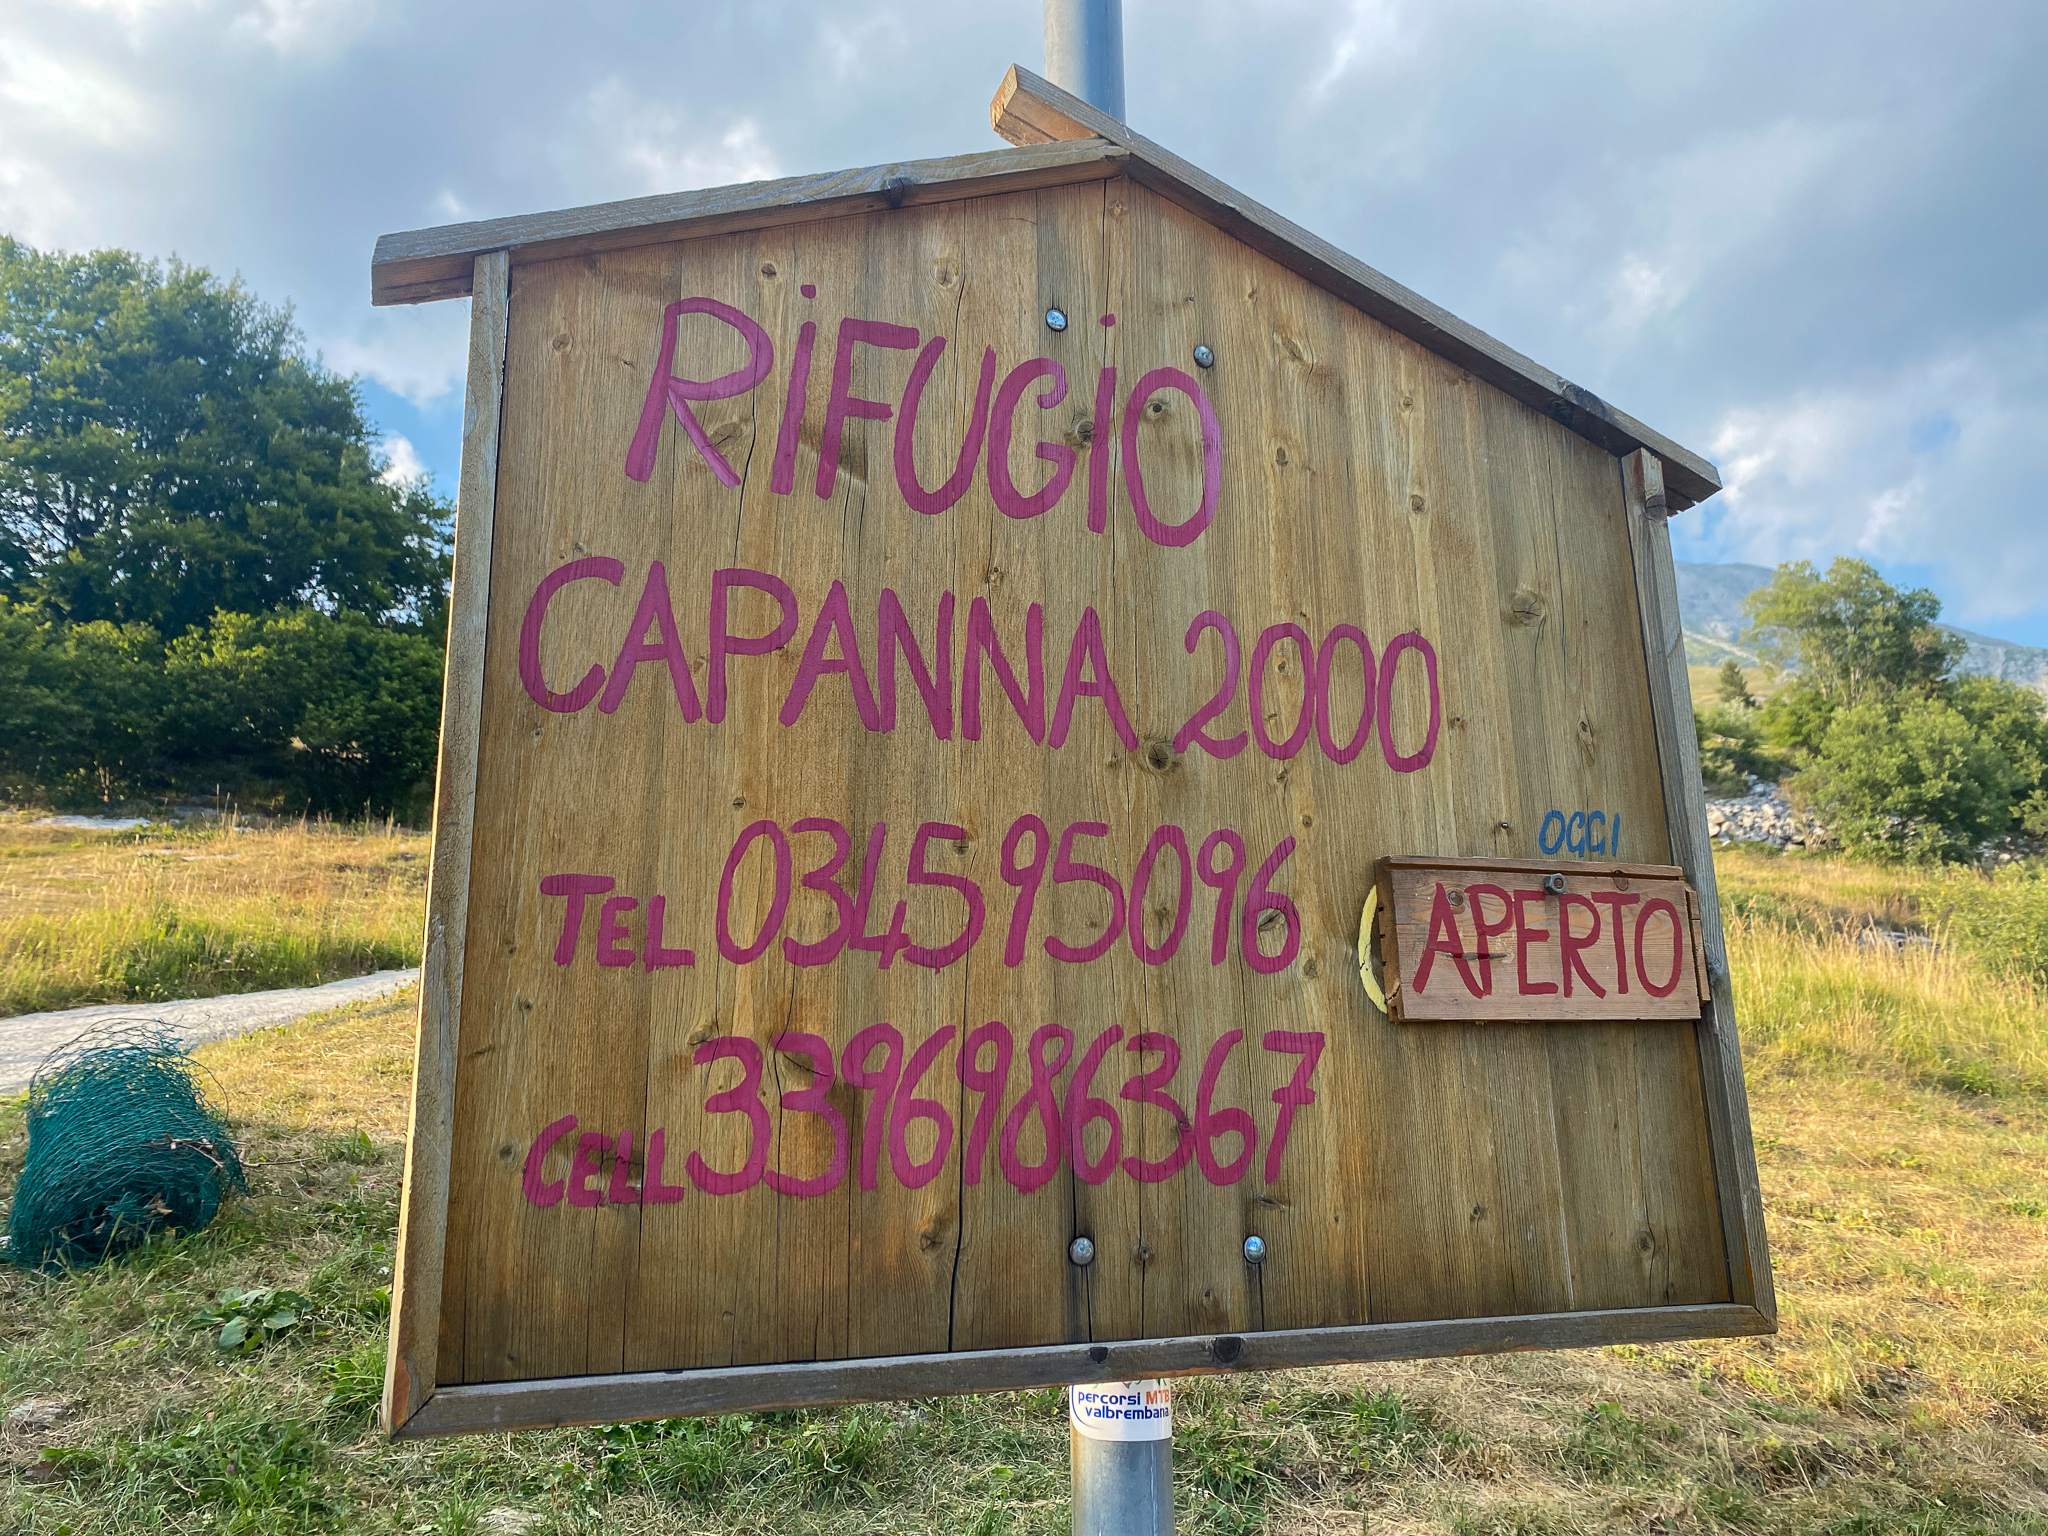 Cartello Capanna 2000